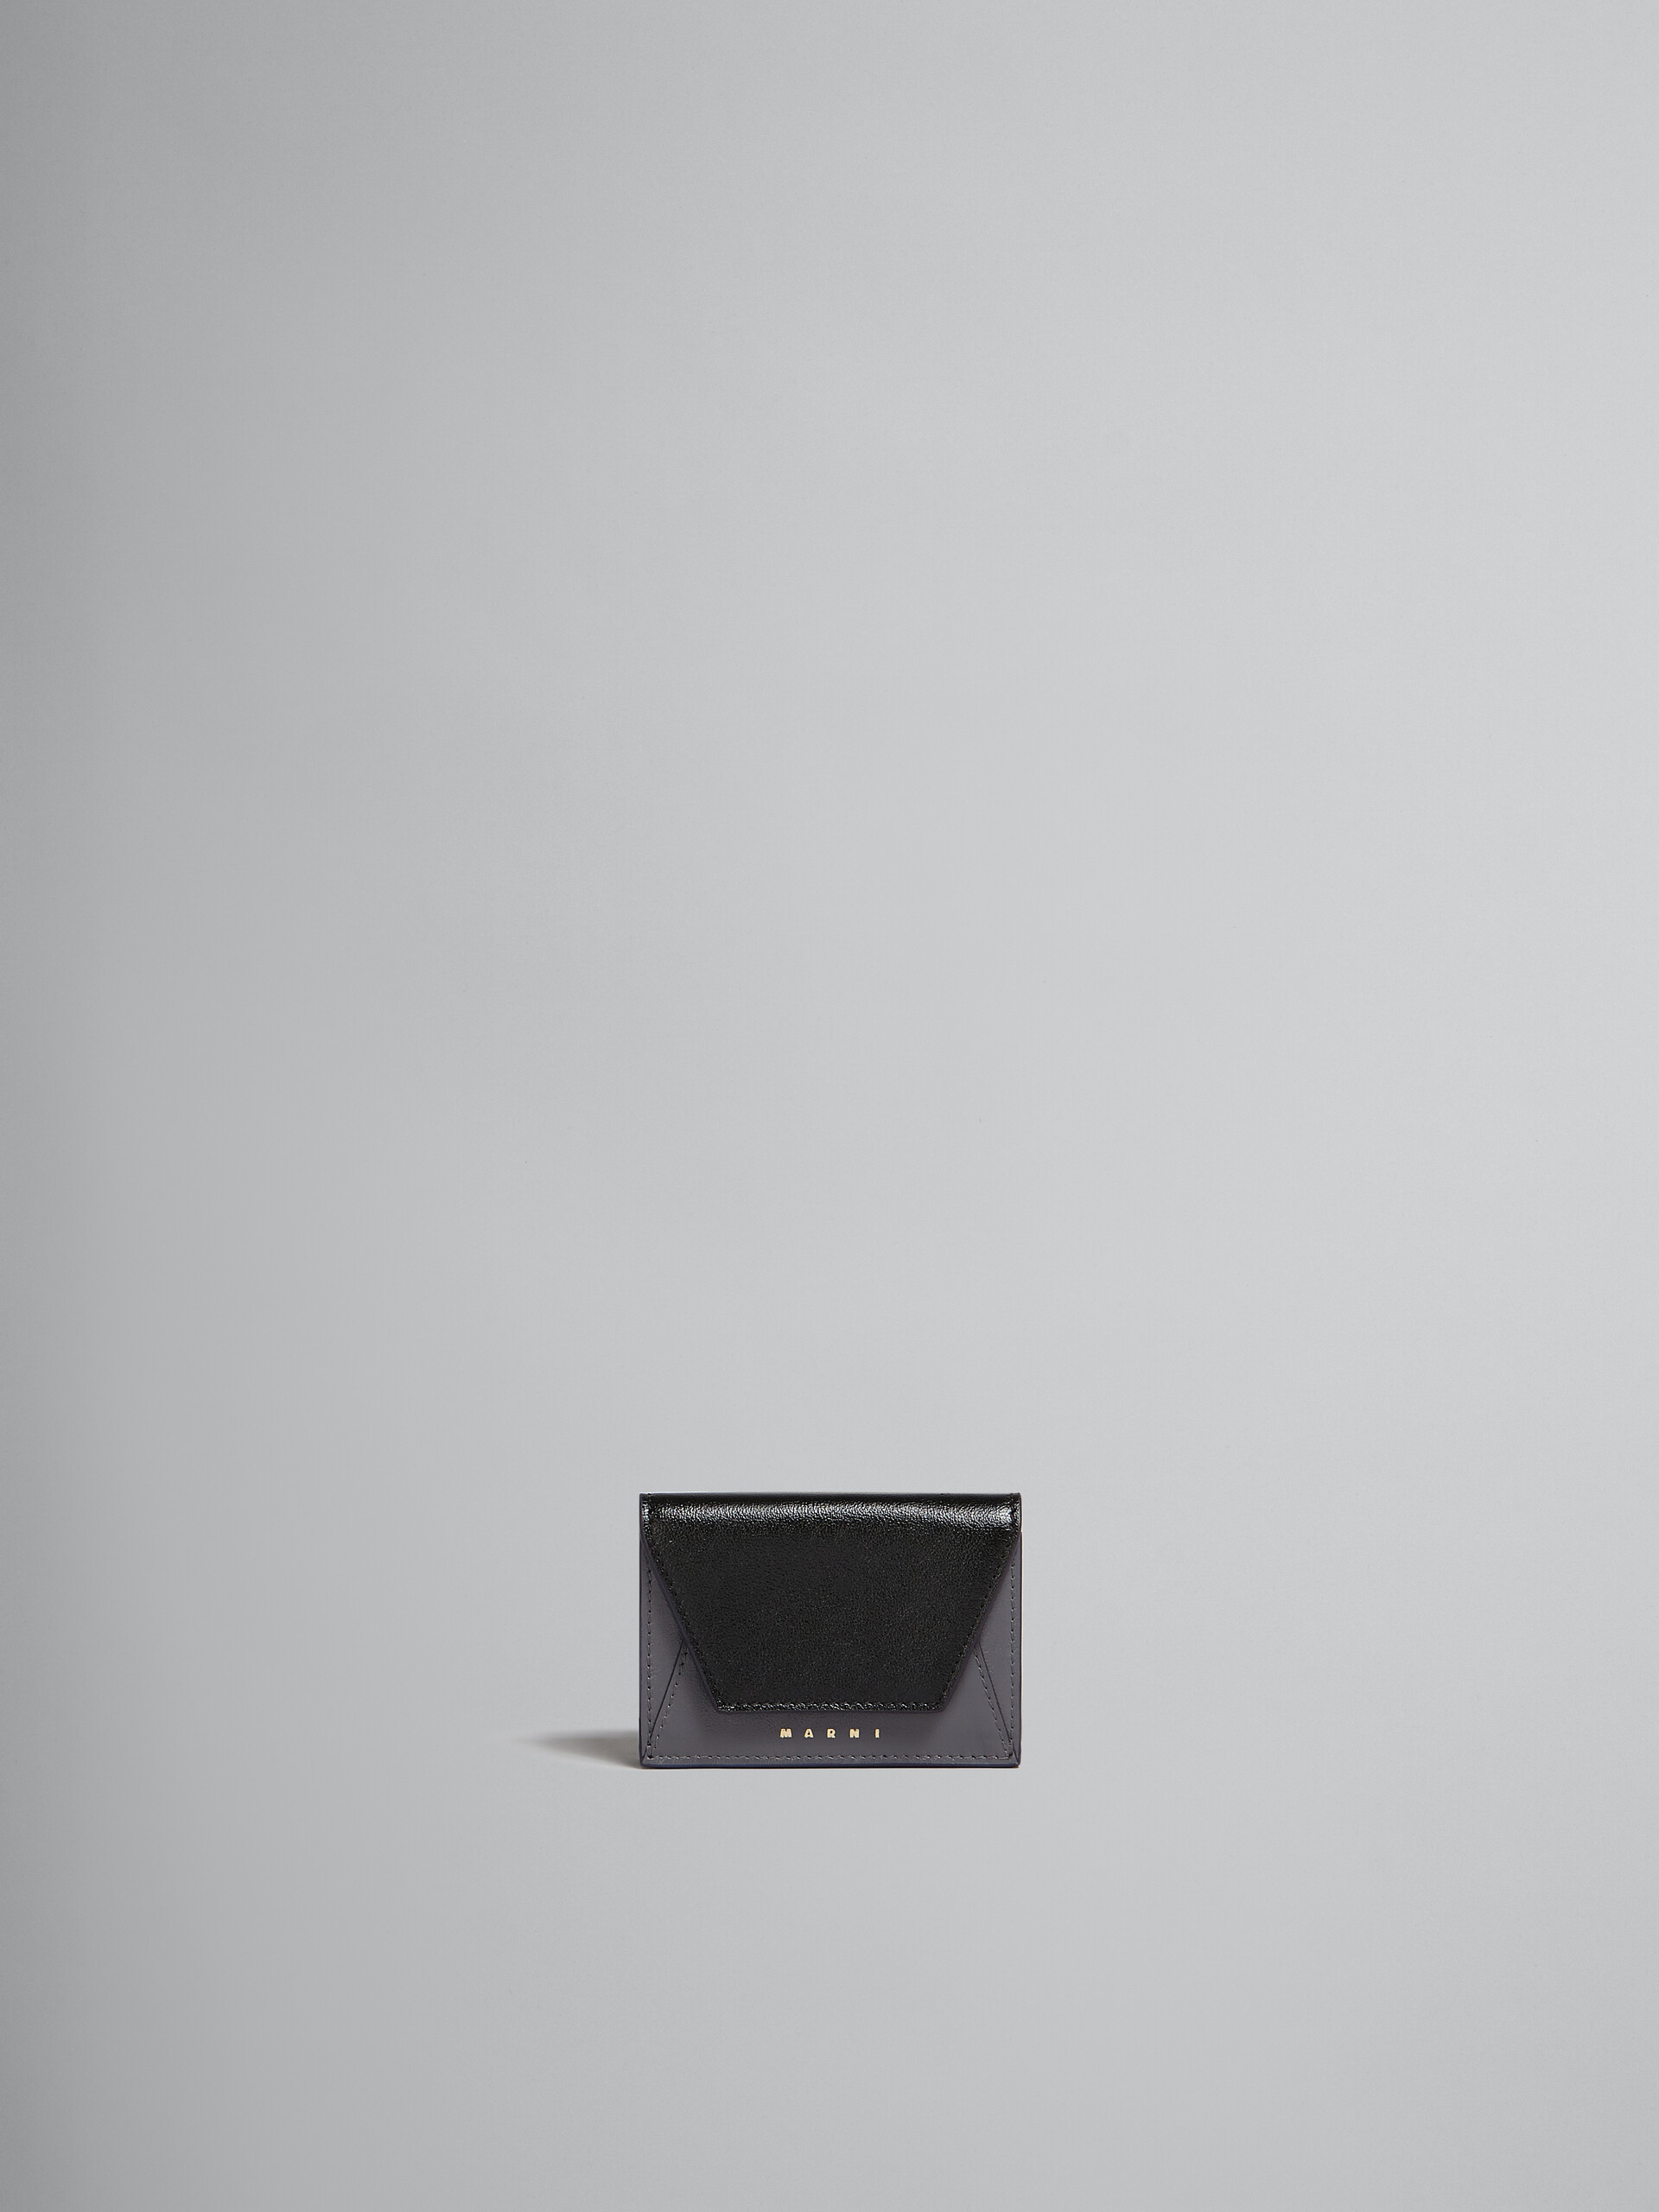 MARNIで人気のお財布は、レザー製三つ折りウォレット